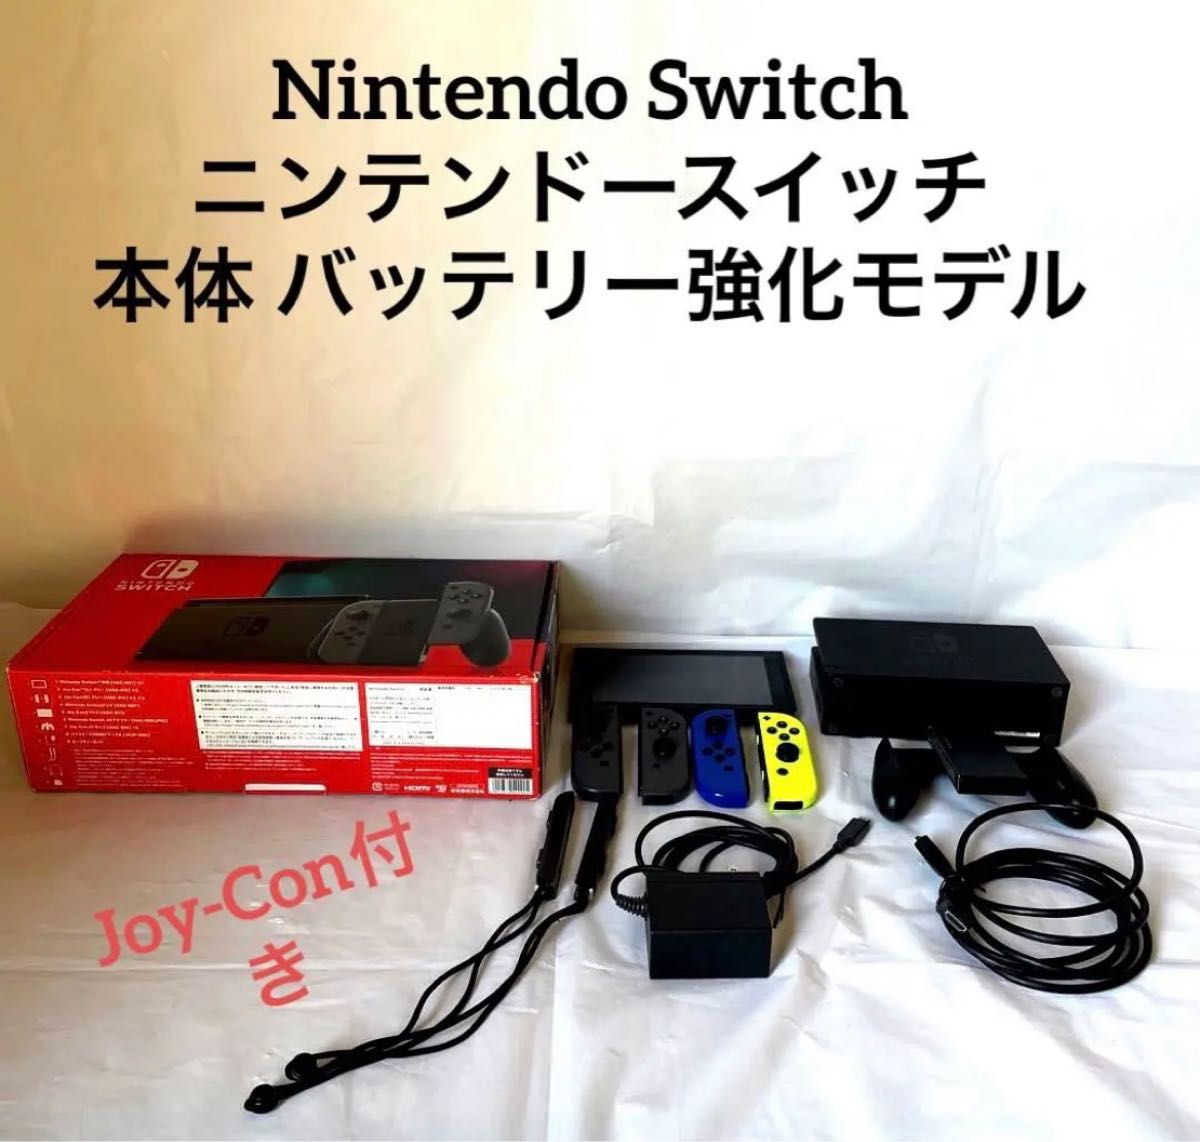 Nintendo Switch ニンテンドースイッチ 本体 バッテリー強化モデル